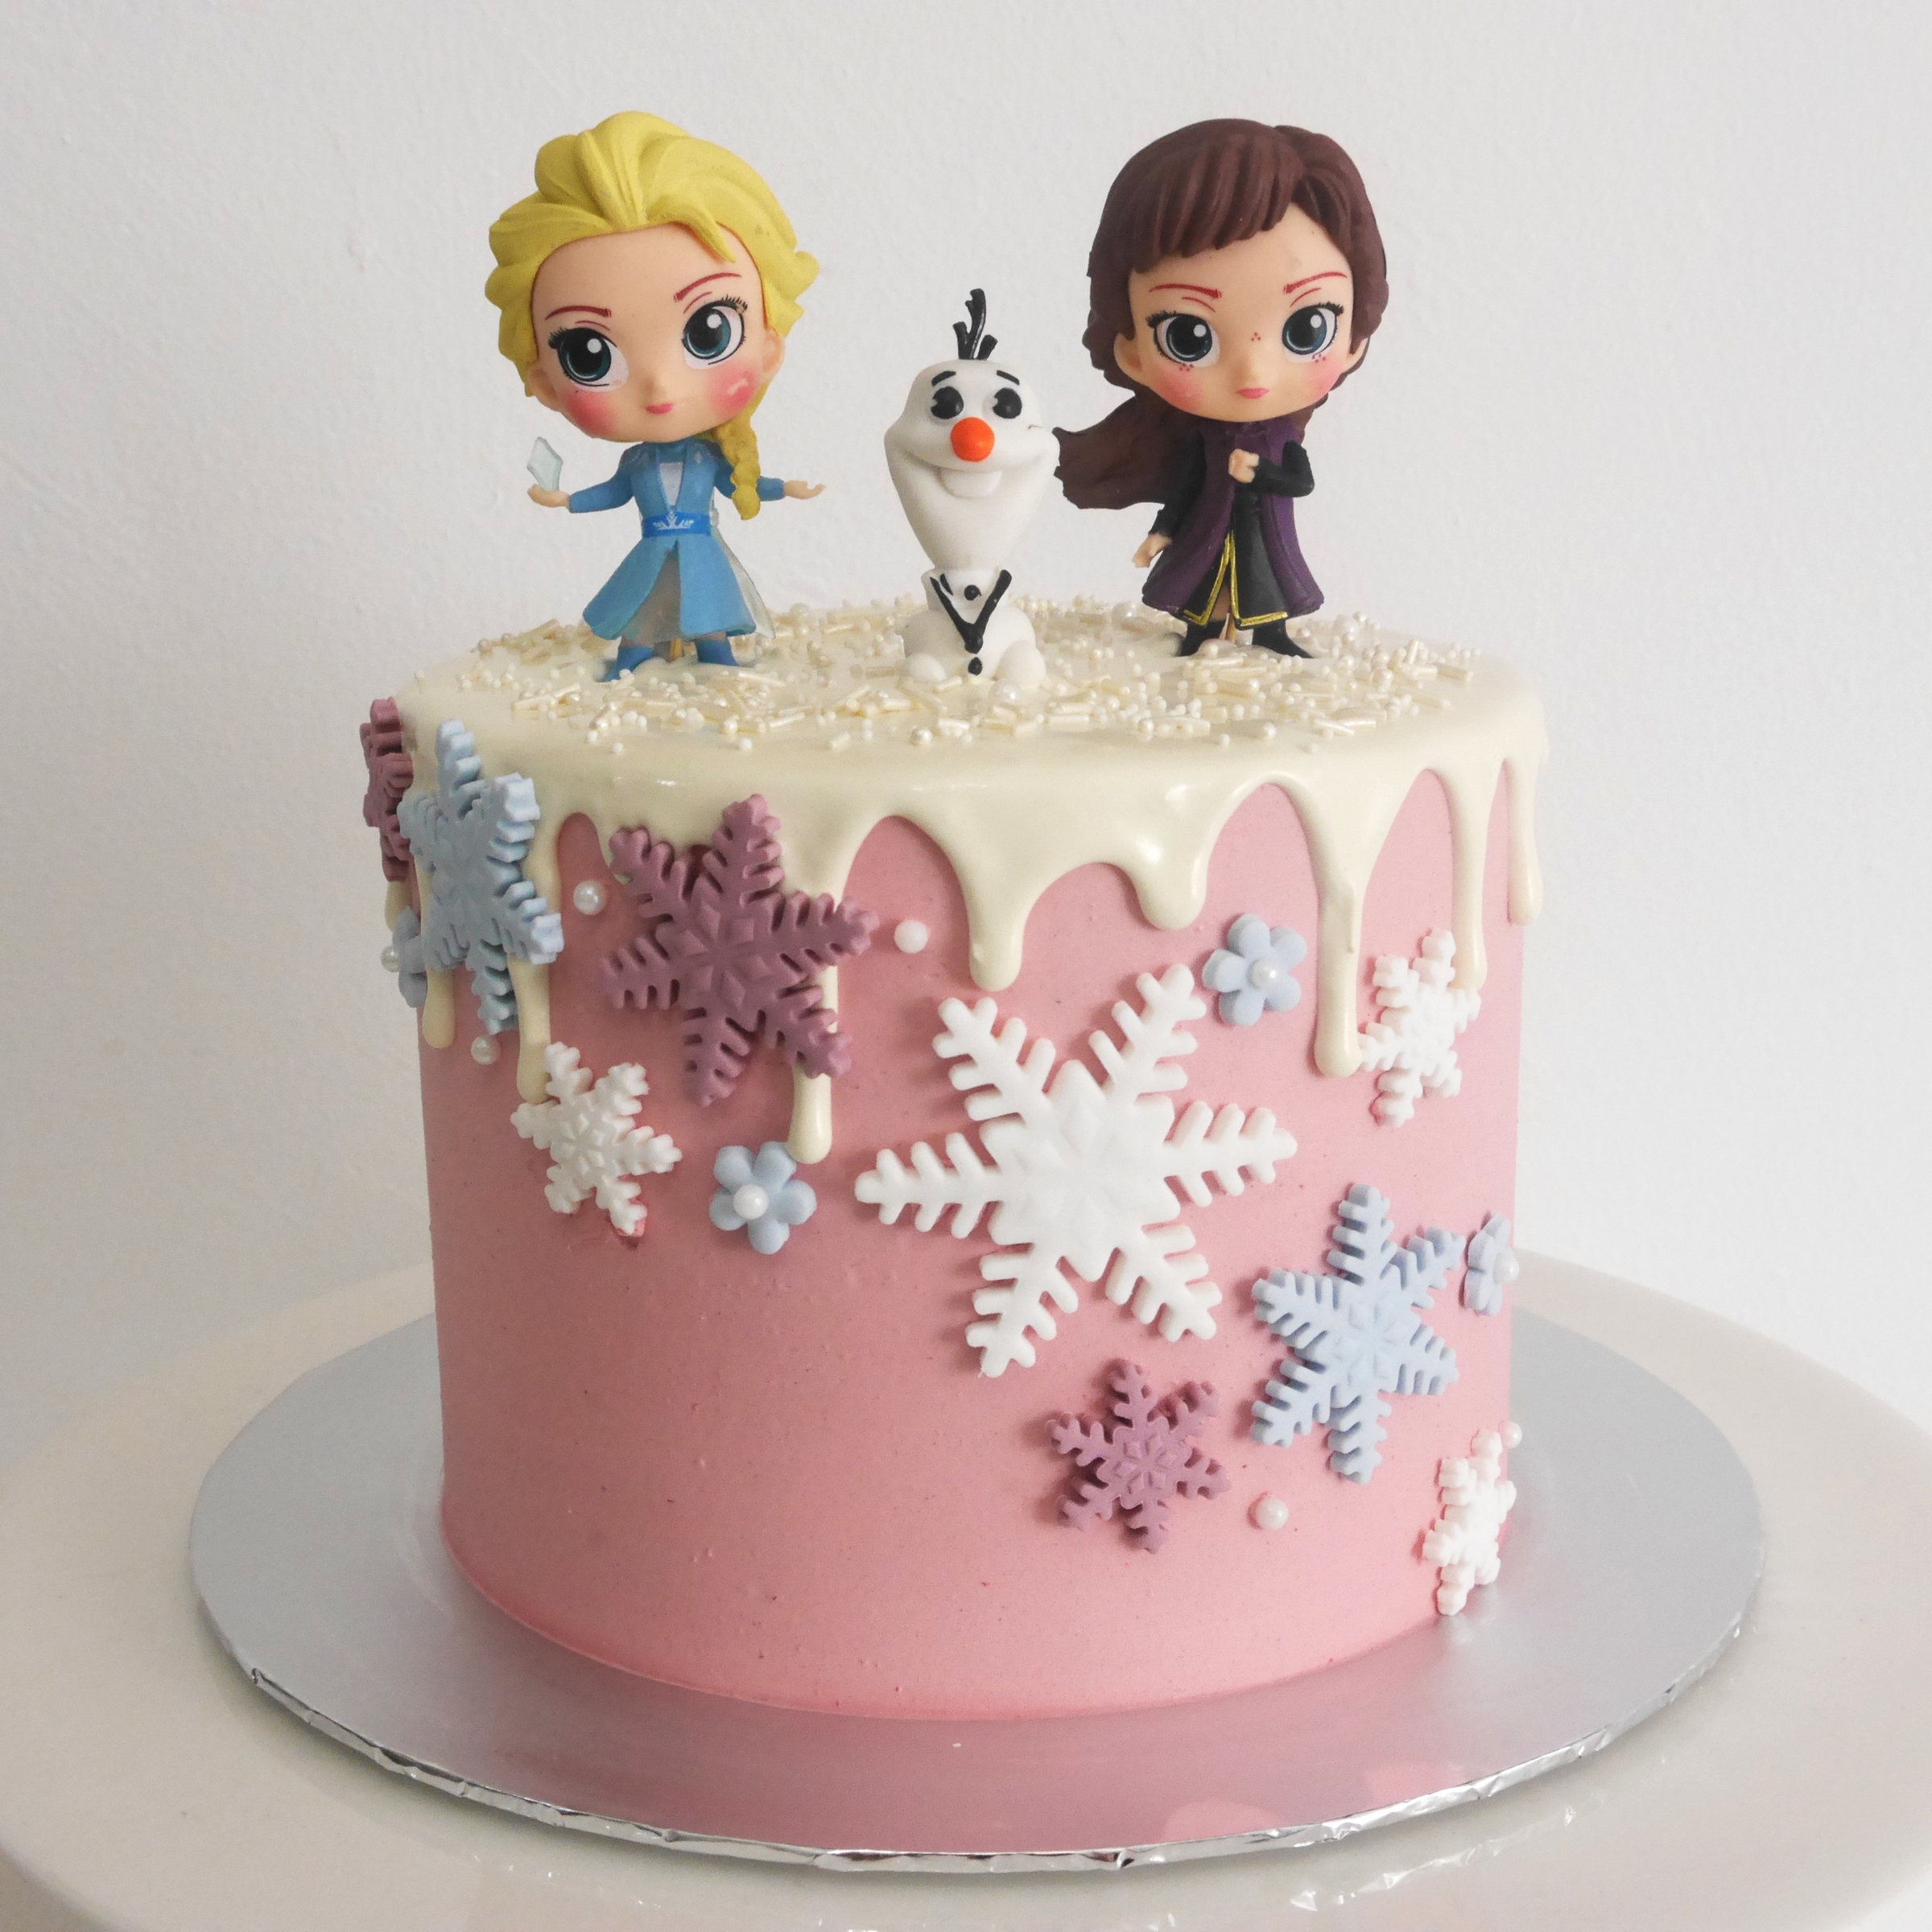 Serene's Kitchen | Frozen birthday cake, Elsa cakes, Themed cakes